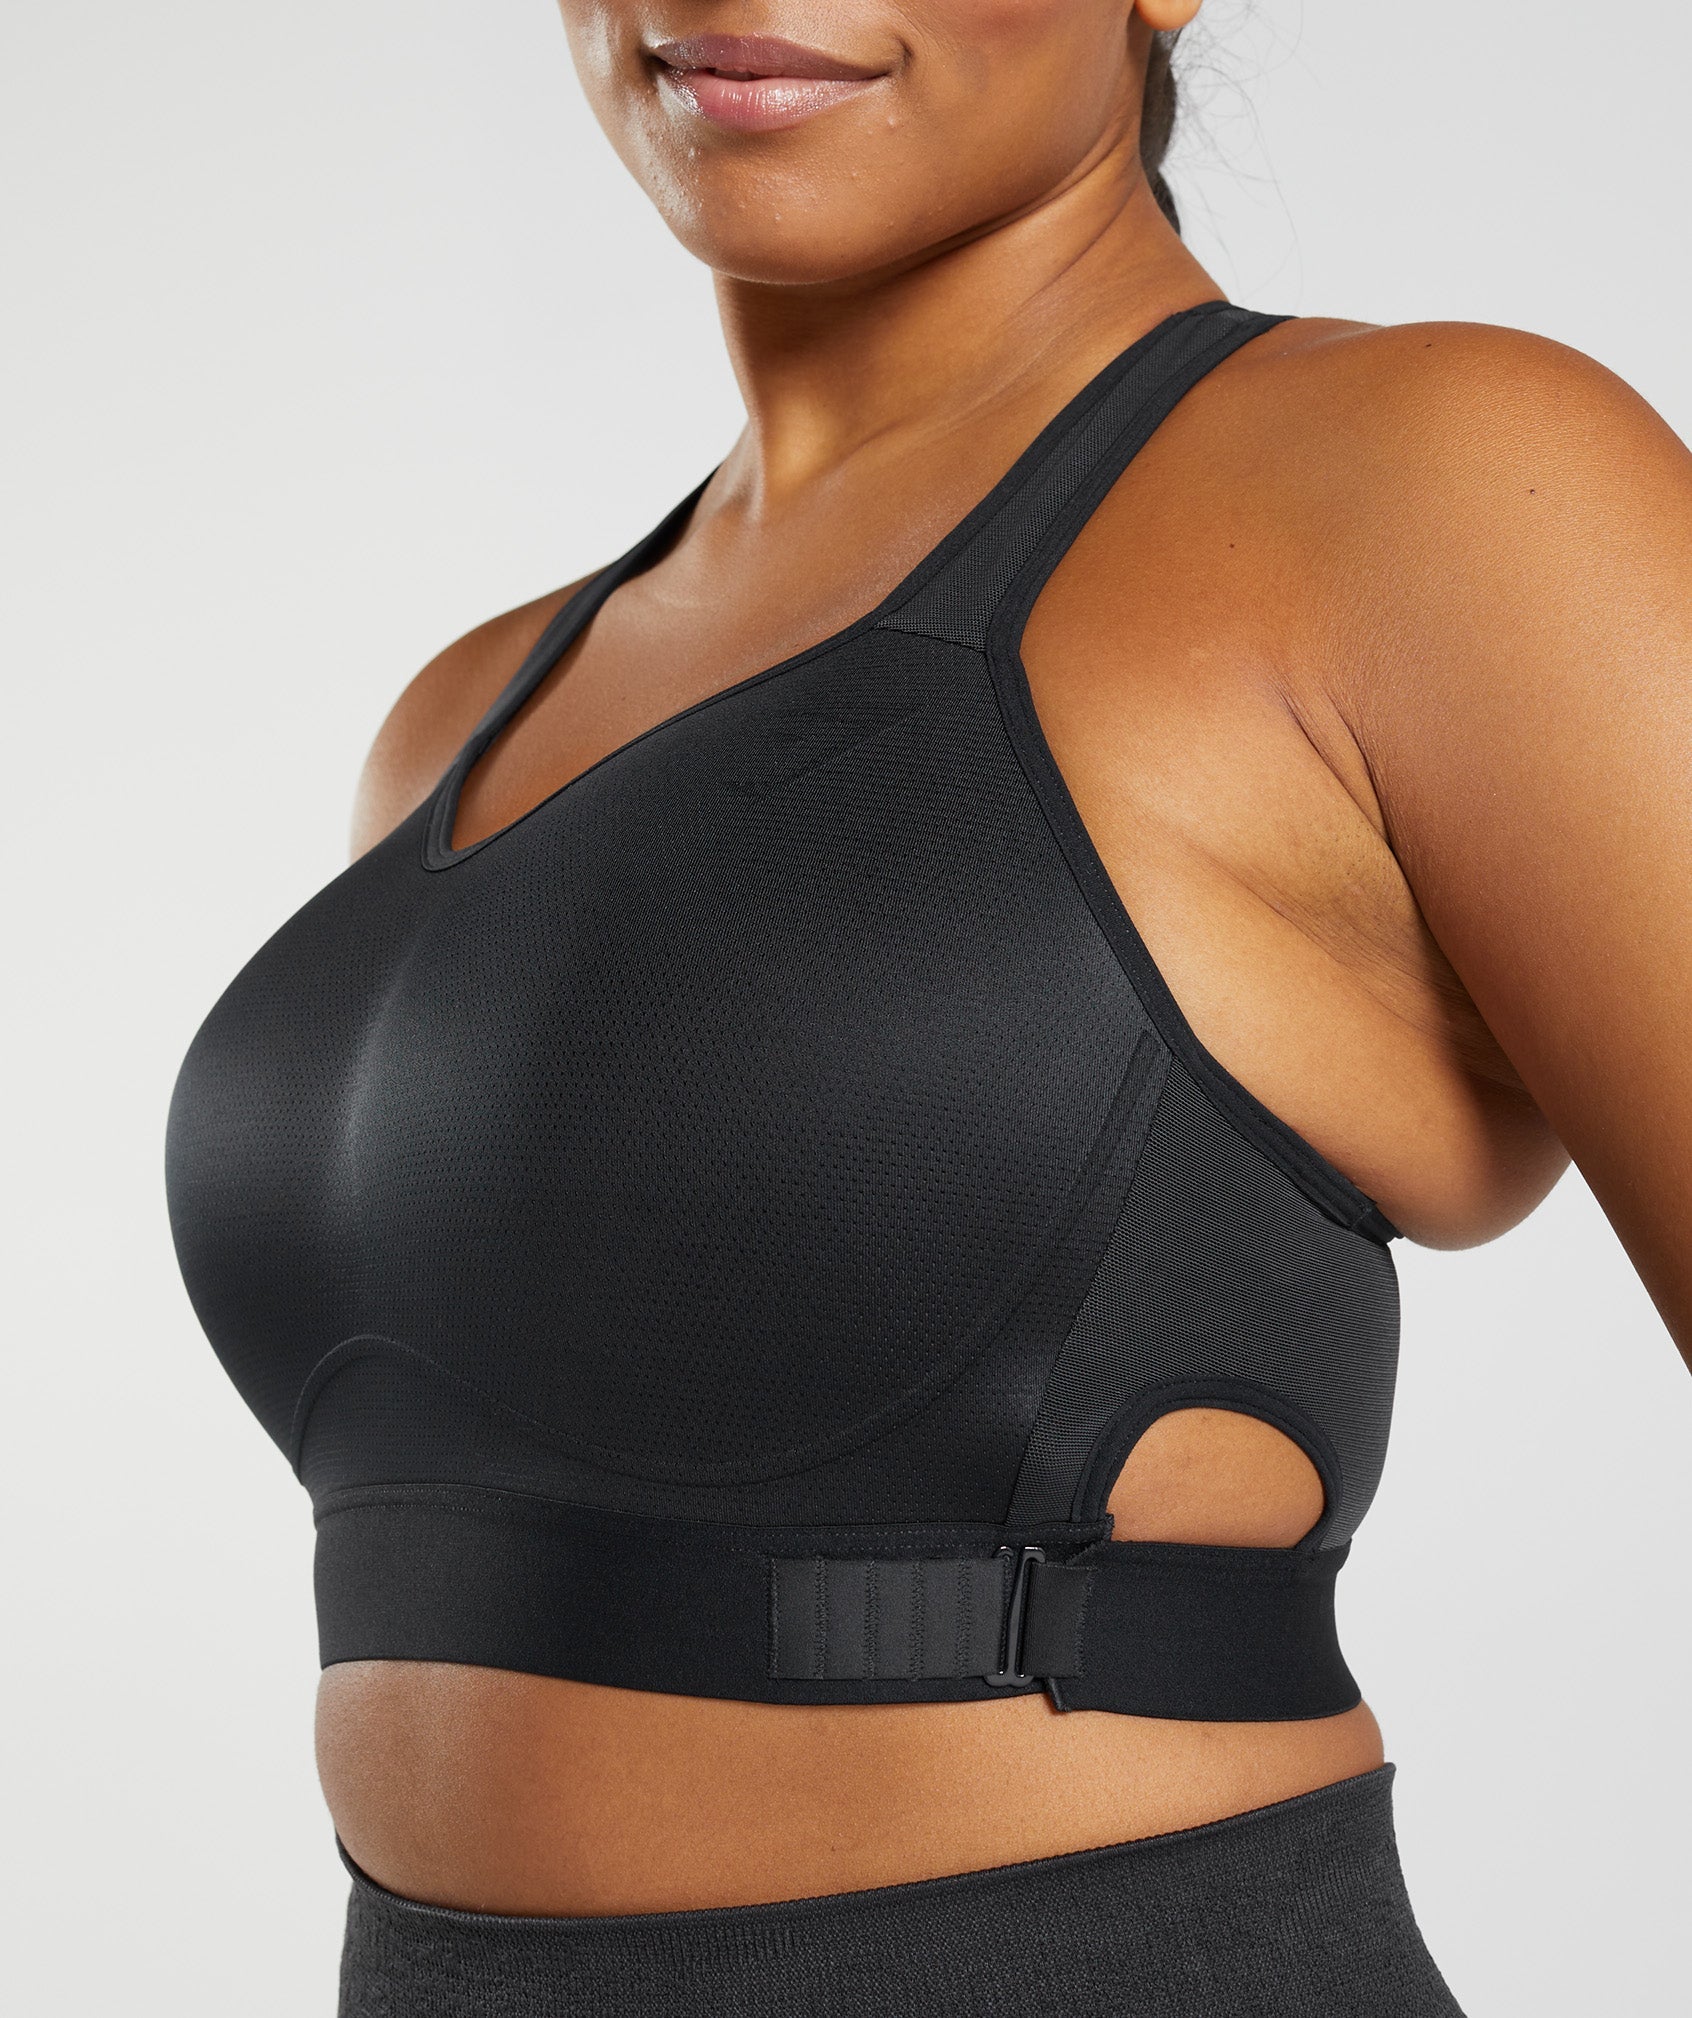 New Gymshark Women's Black Open Back Training Sports Bra Size